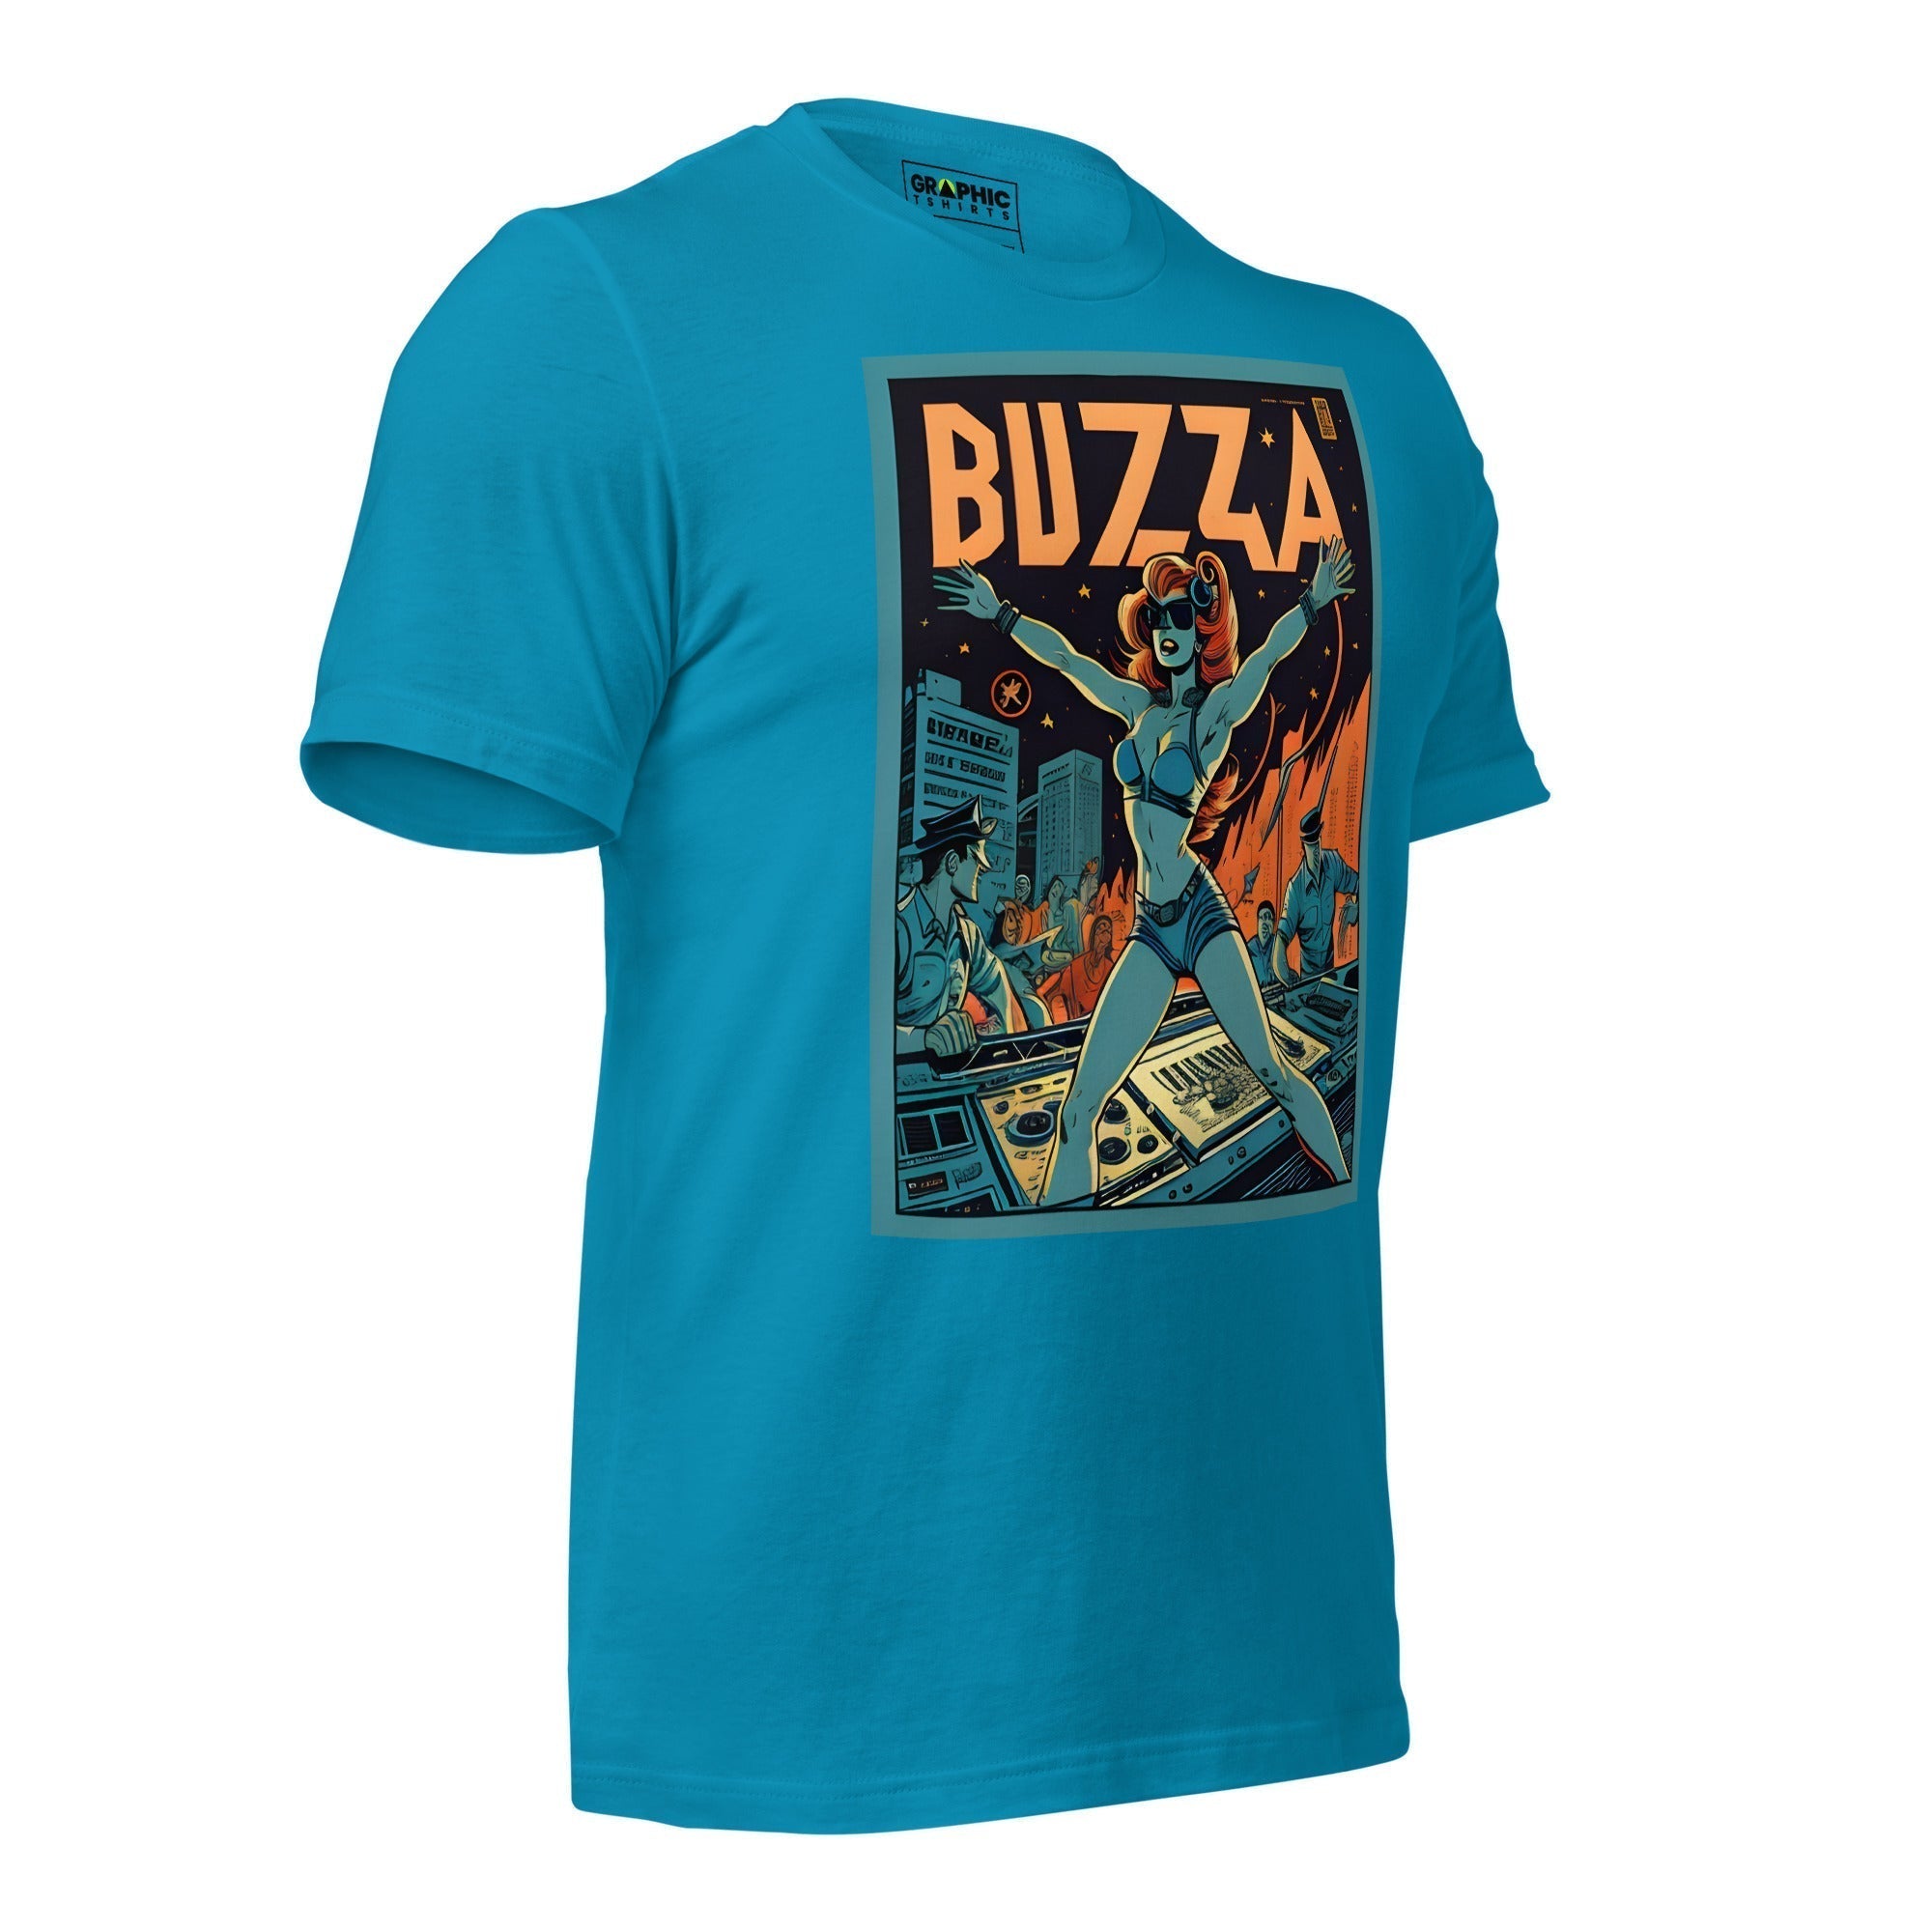 Unisex Crew Neck T-Shirt - Ibiza Night Club Heroes Comic Series v.46 - GRAPHIC T-SHIRTS